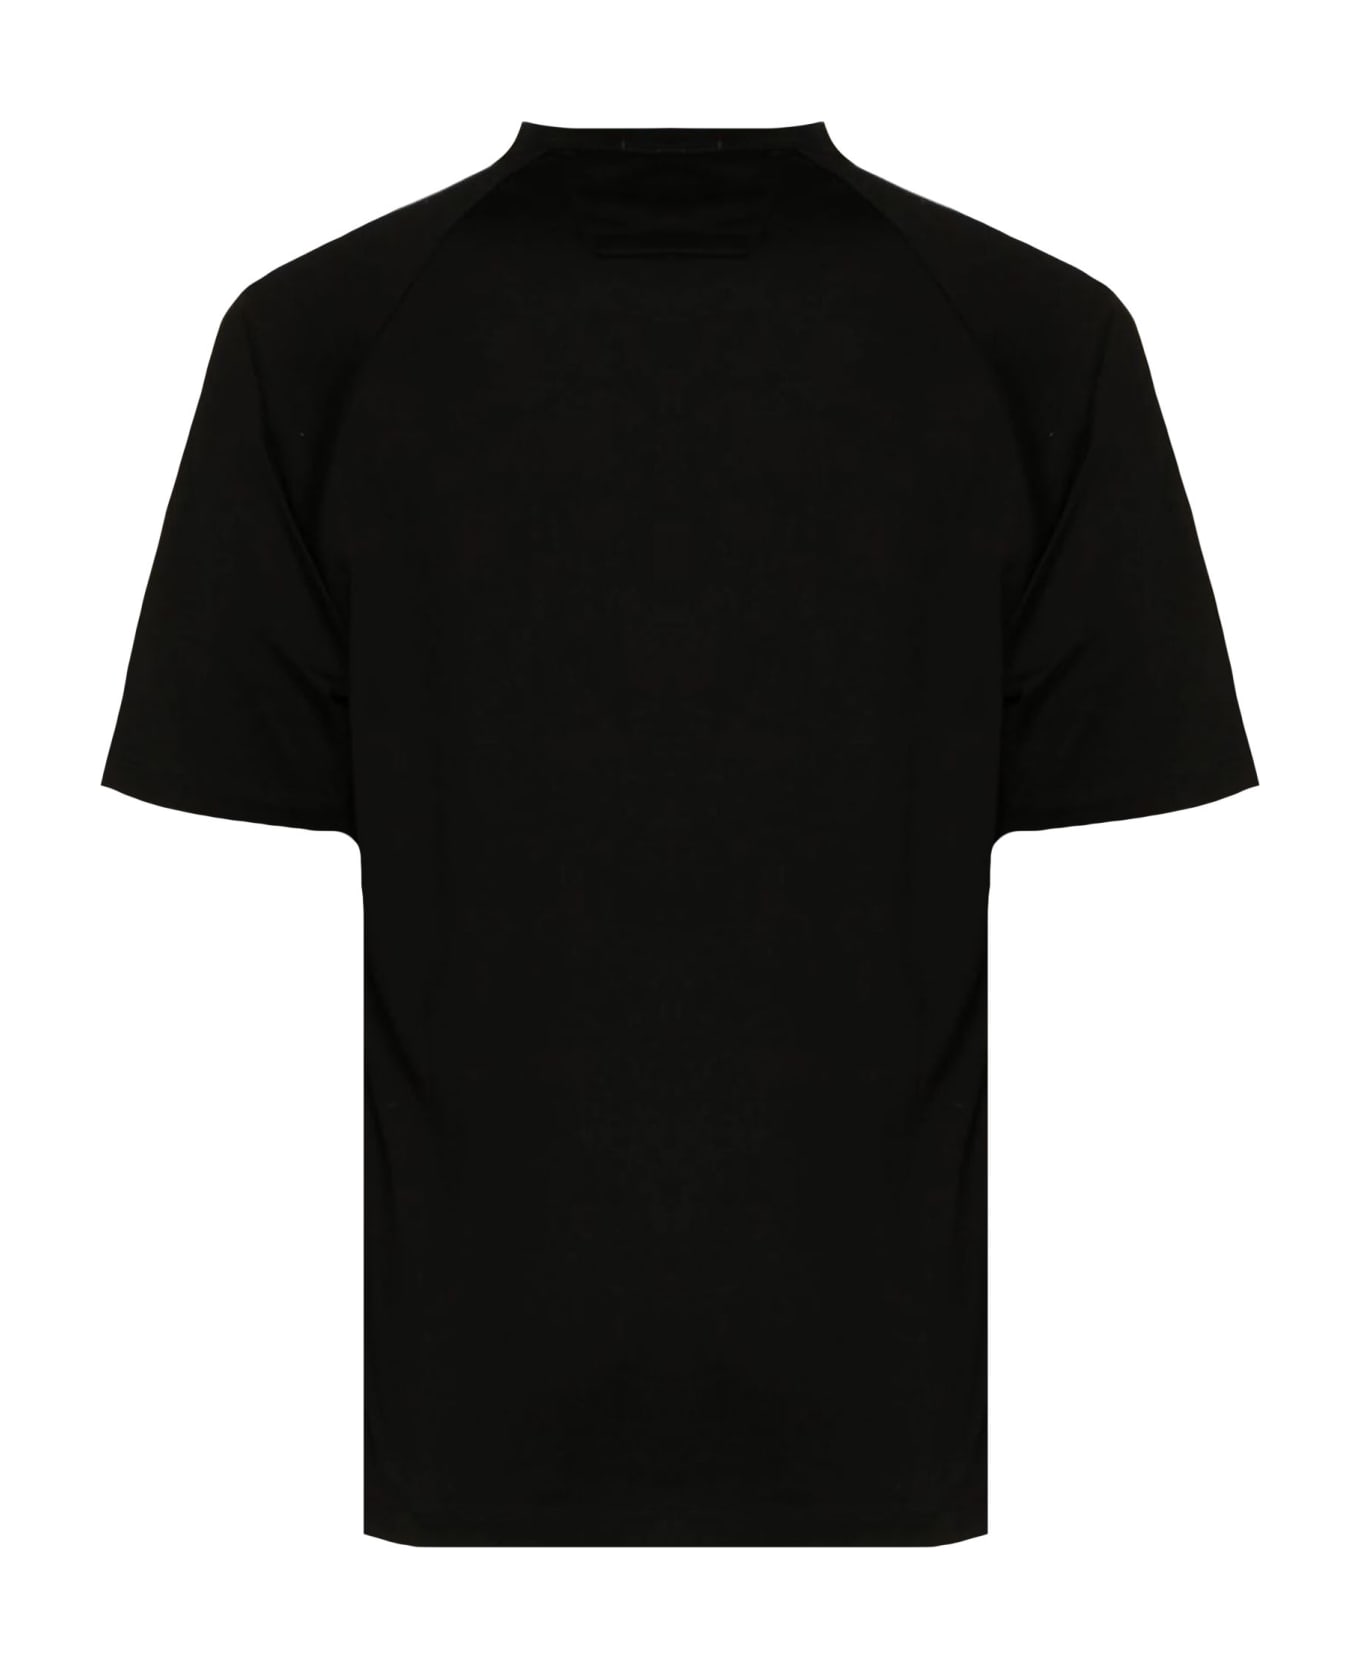 C.P. Company Metropolis Series T-shirt - Black